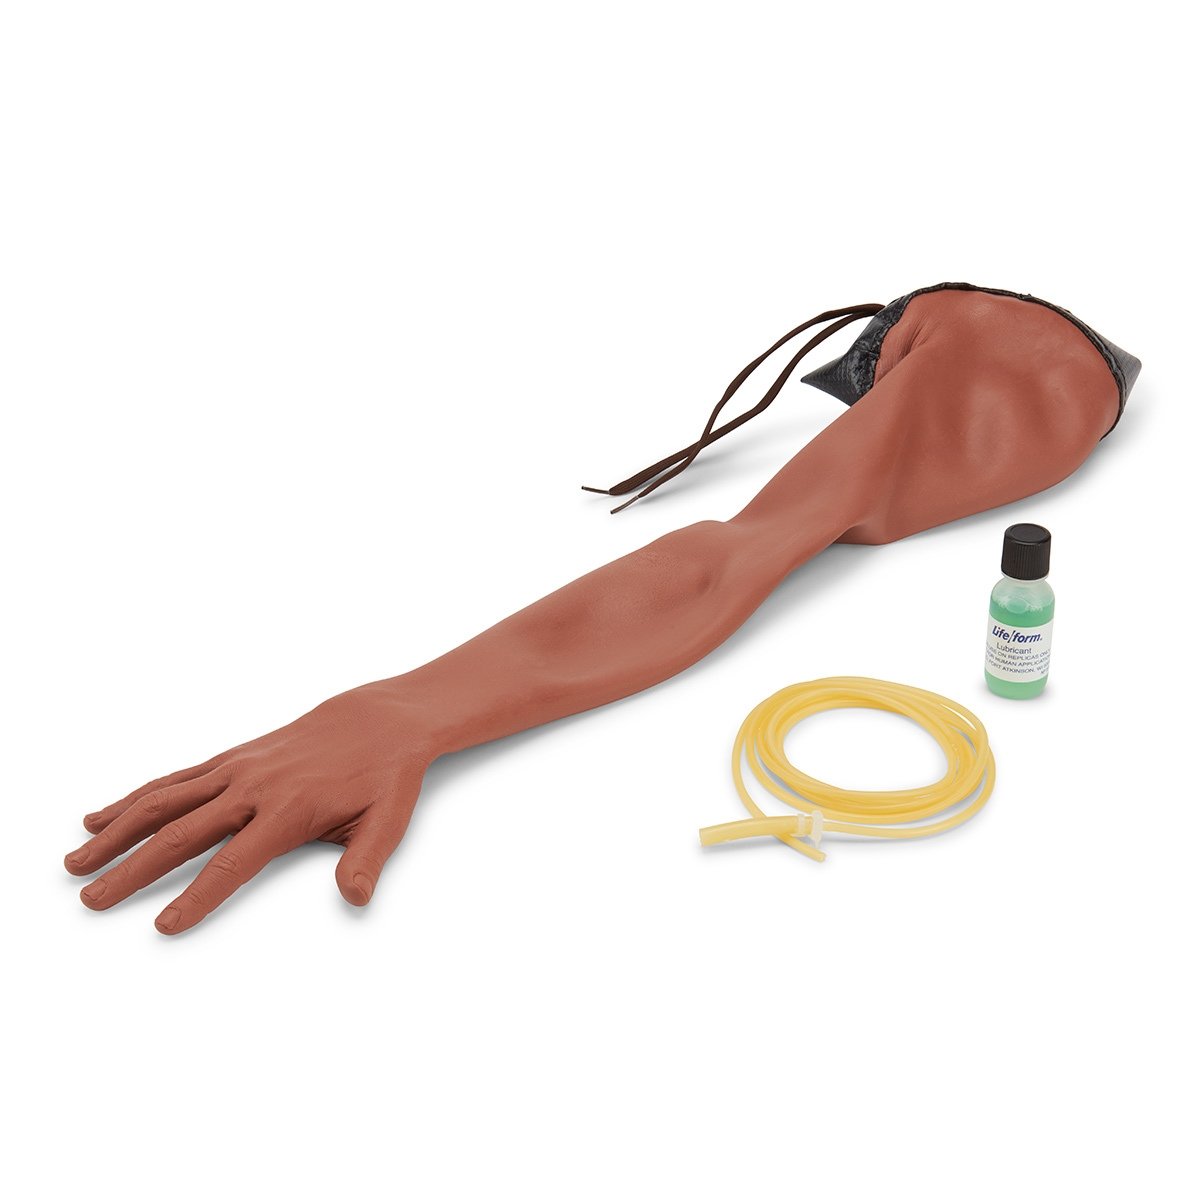 Life/form Pediatric Arm Replacement Skin and Vein Kit - Medium